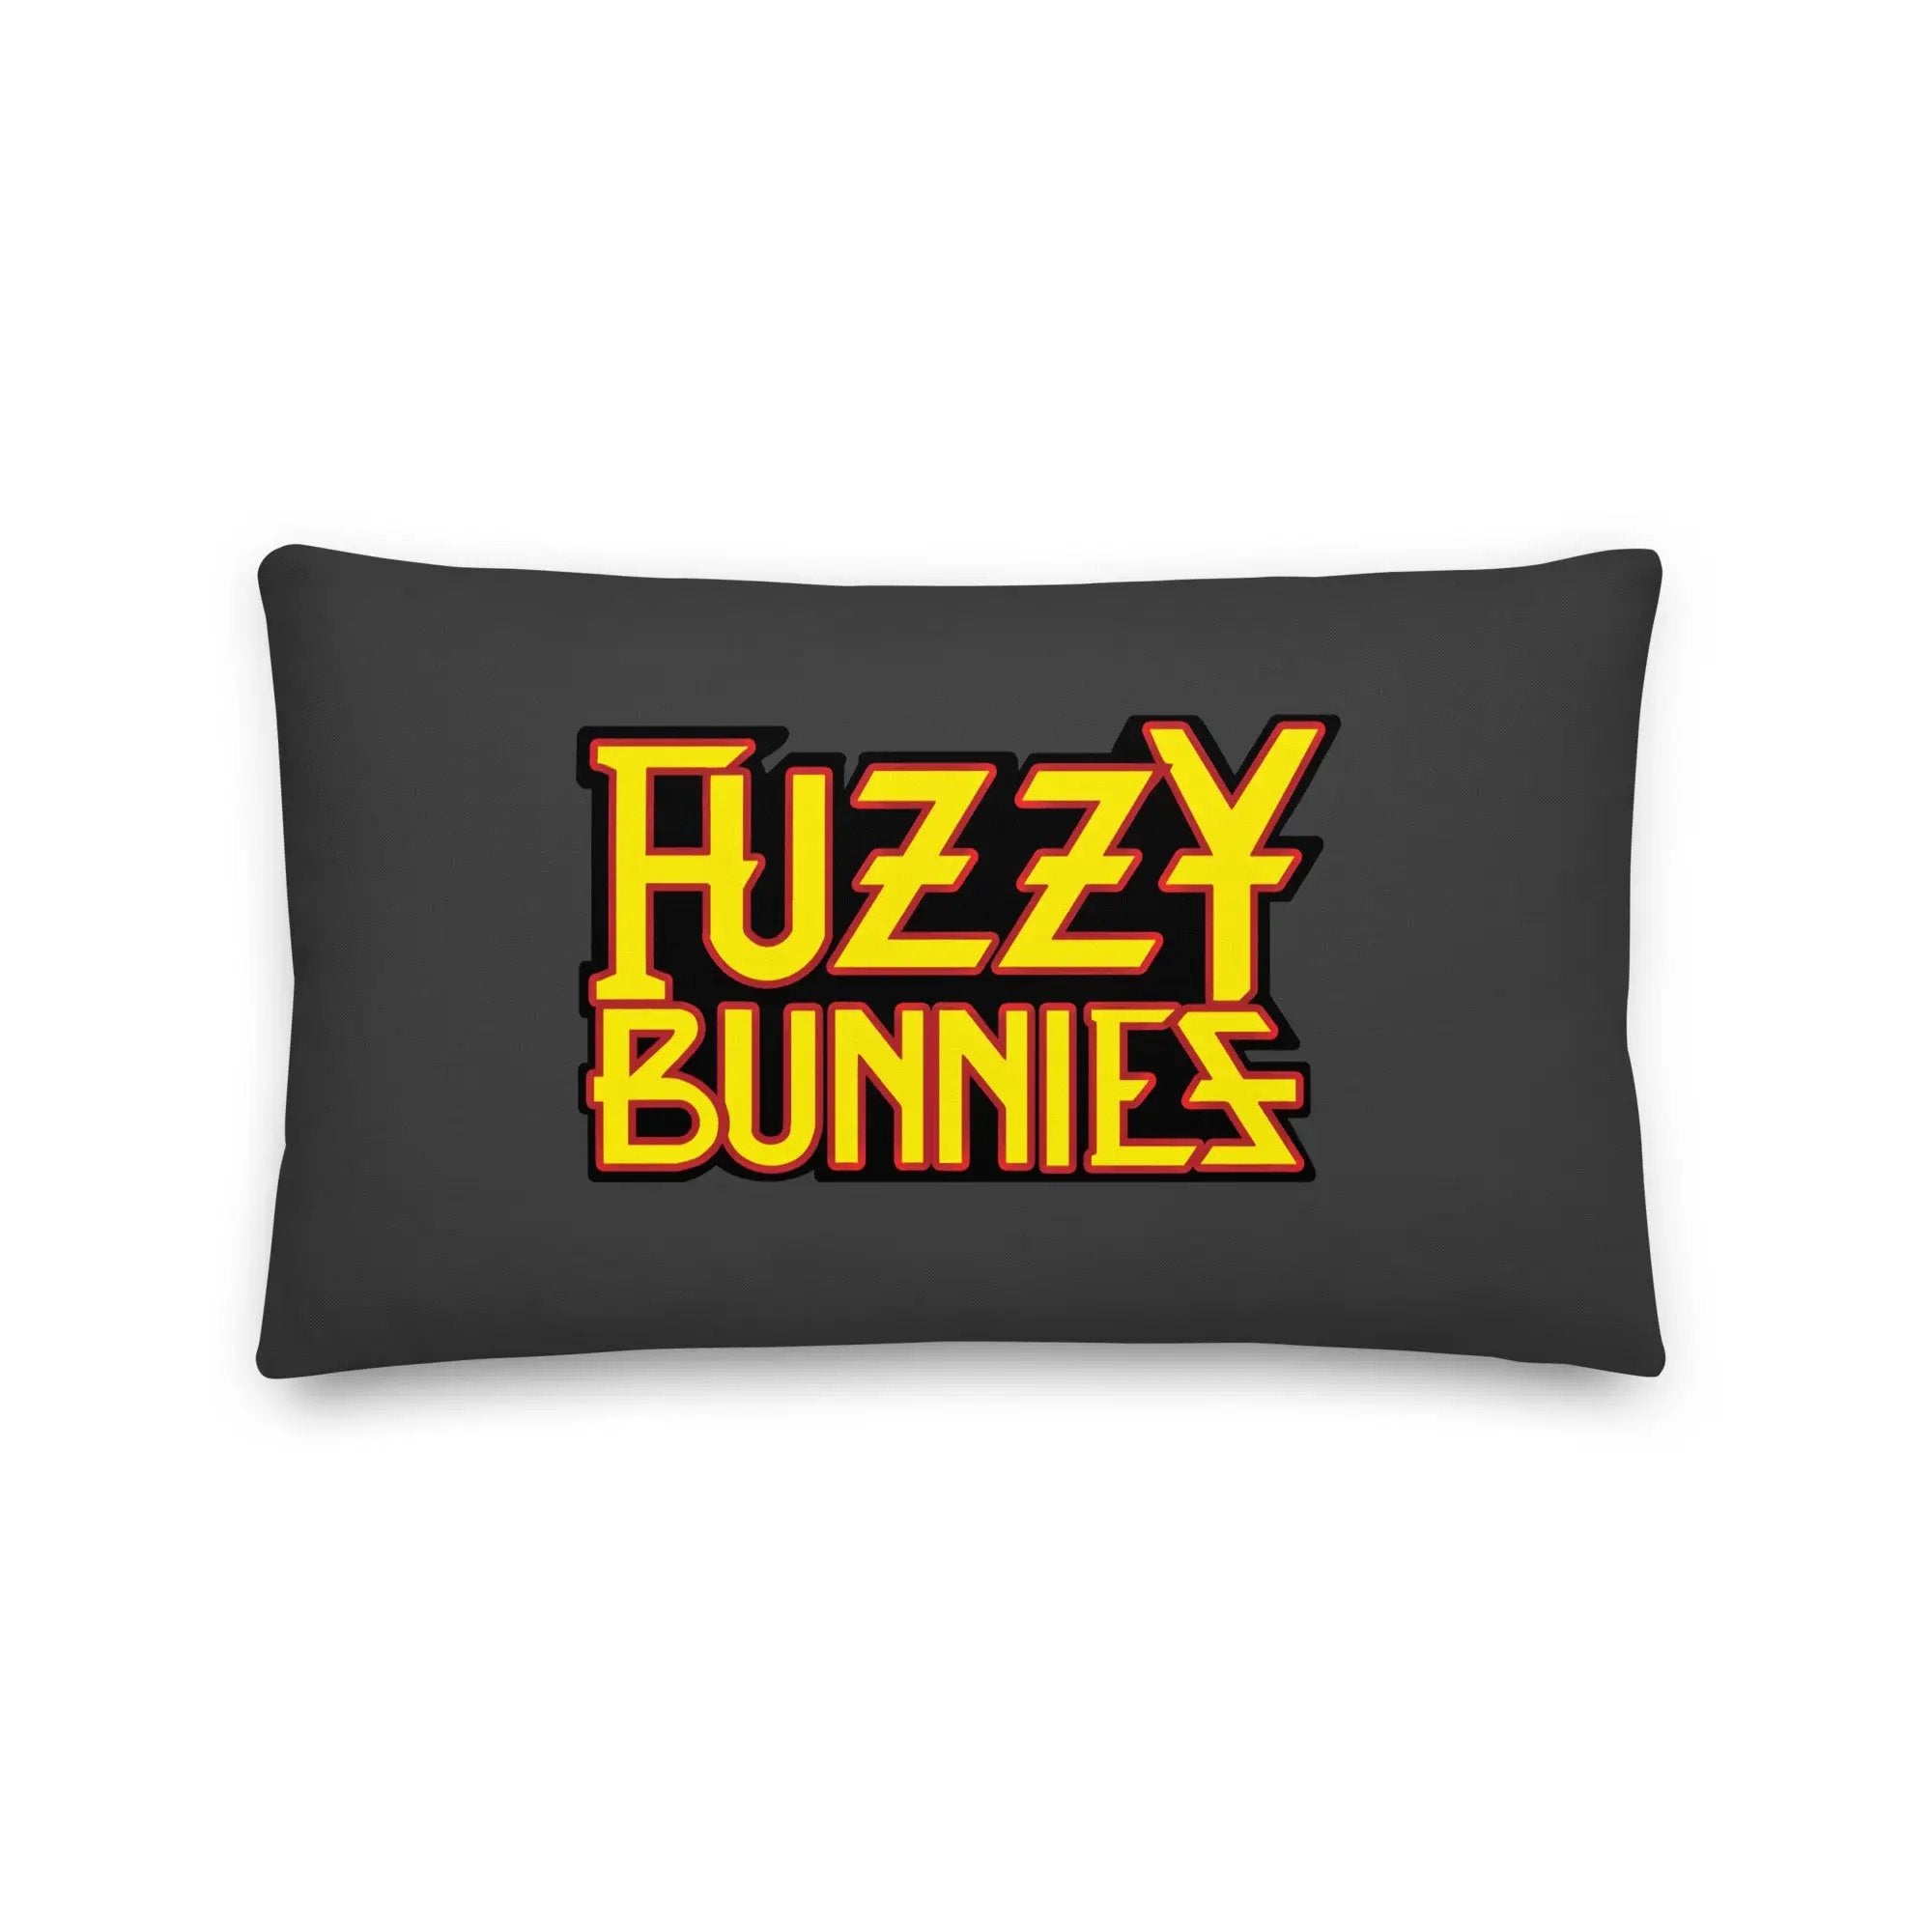 Fuzzy Bunnies Premium Pillow